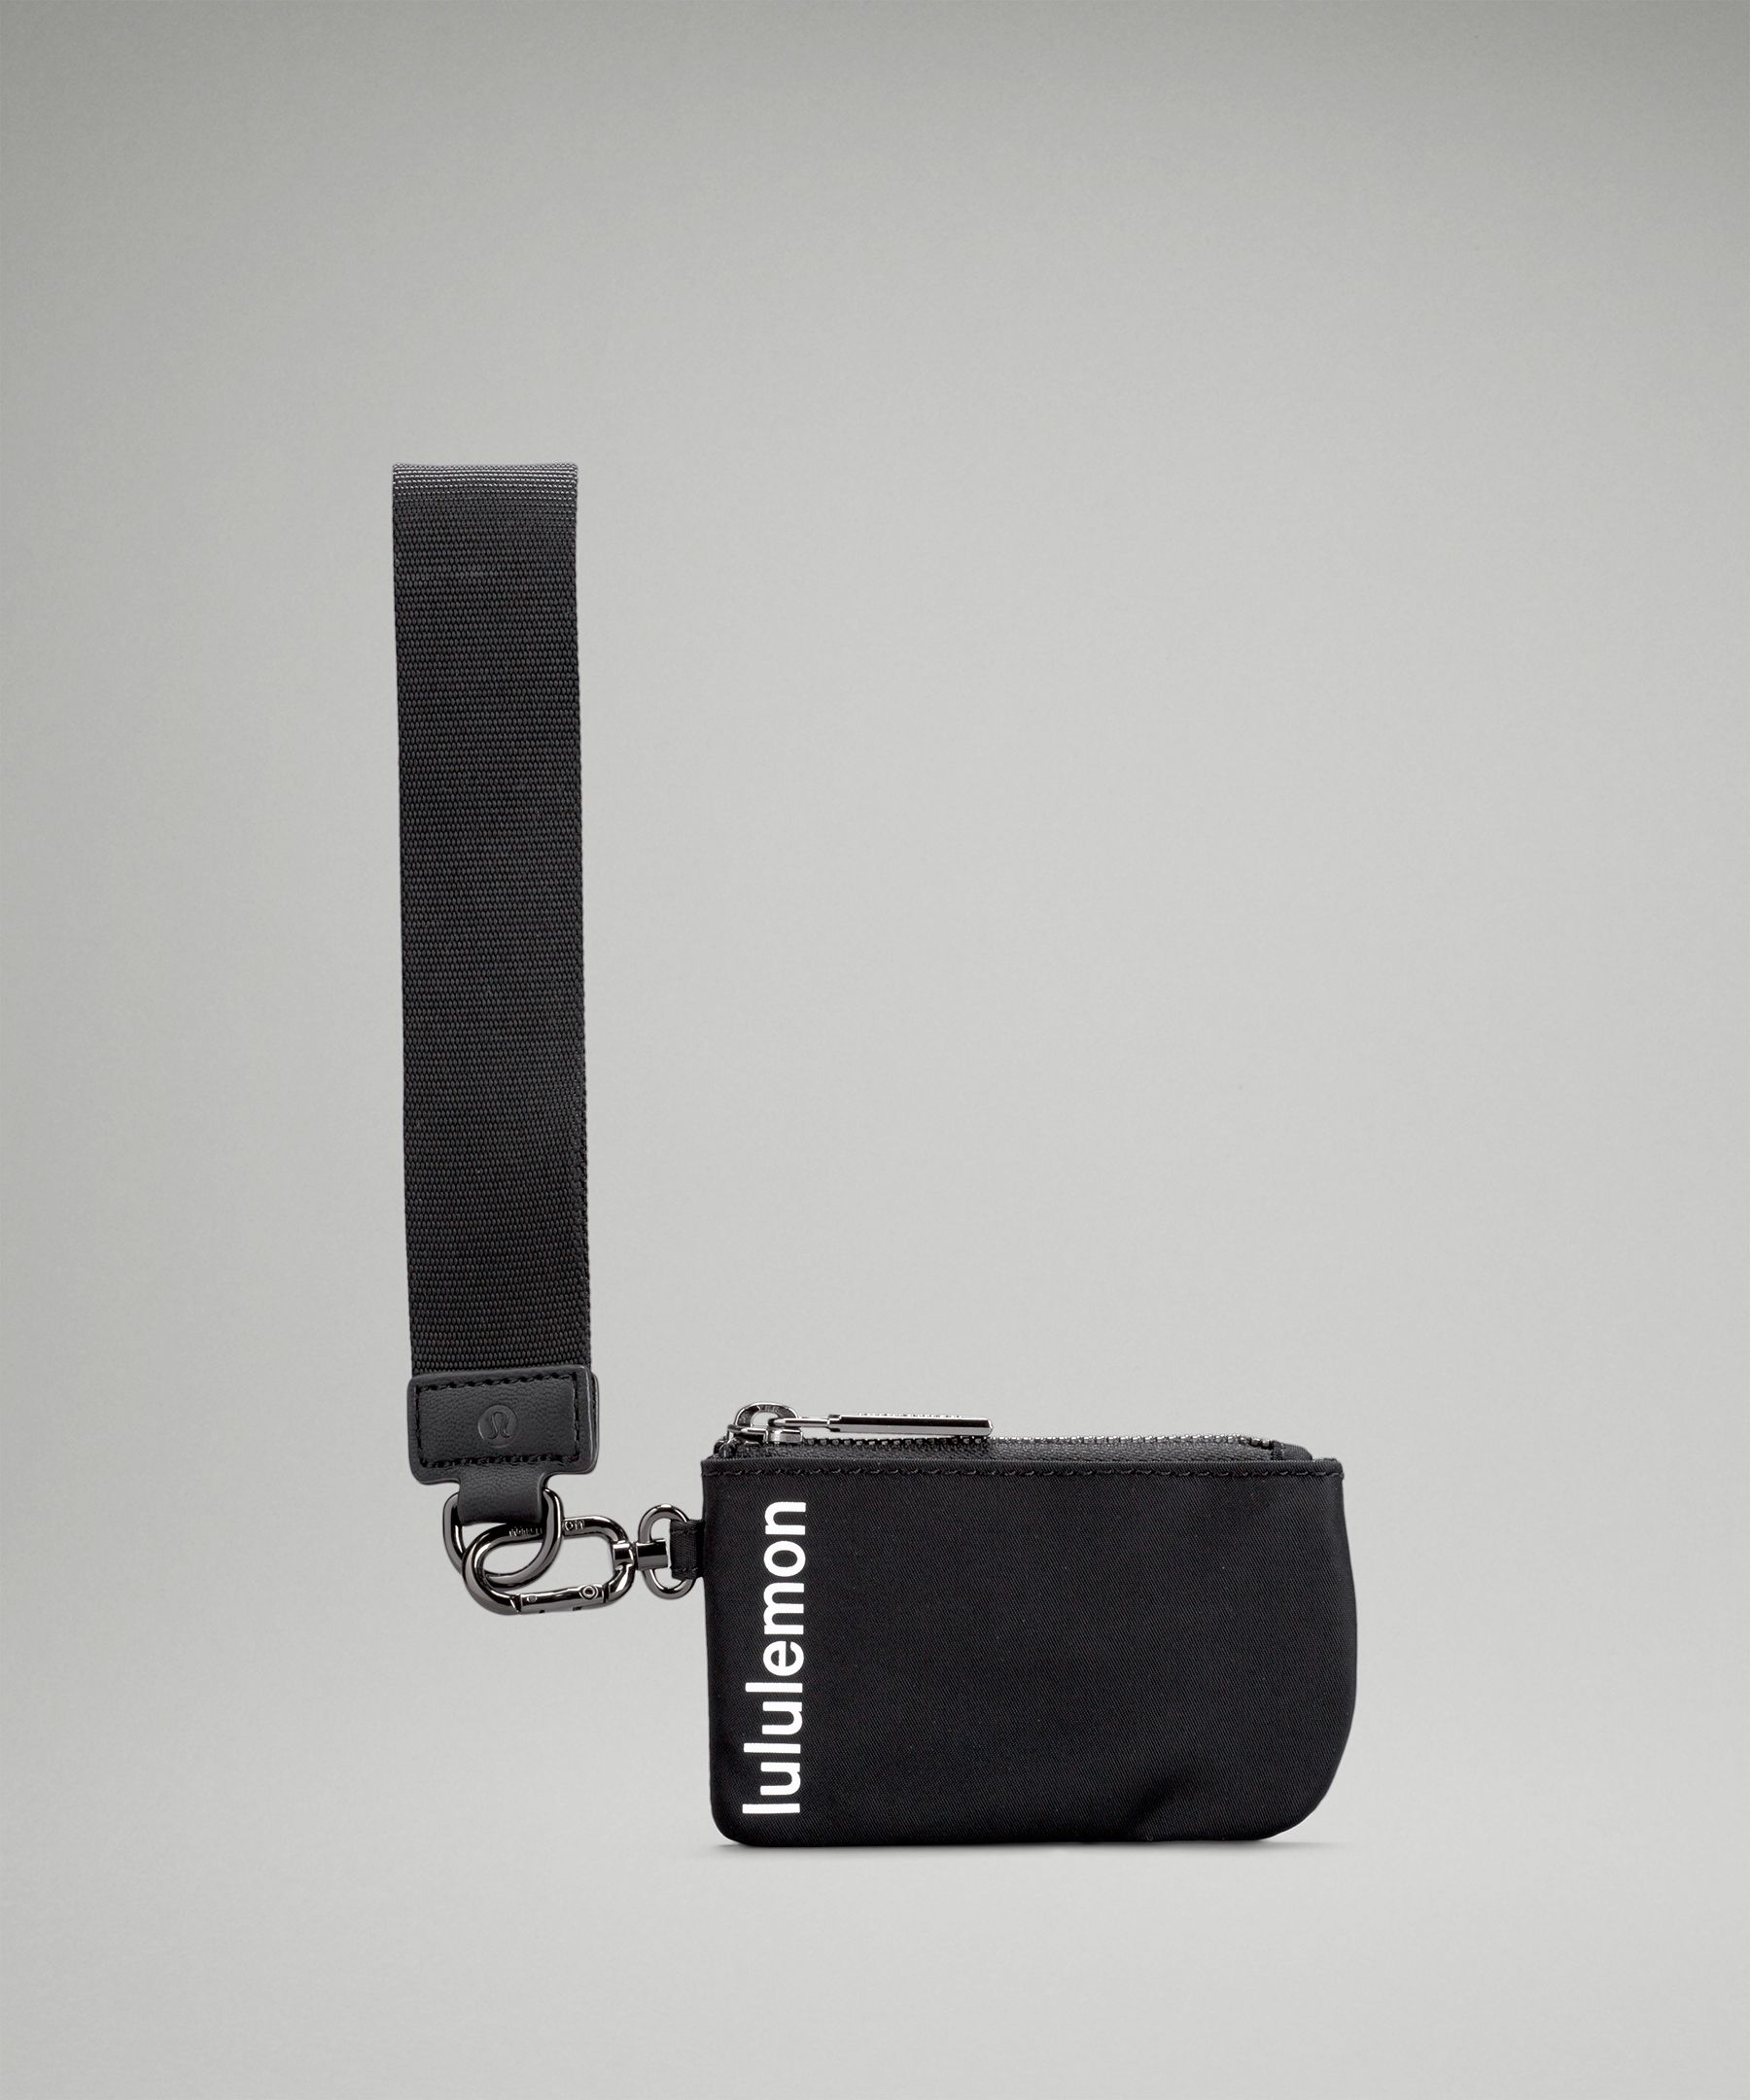 Lululemon Peony dual pouch Wristlet - Women's handbags